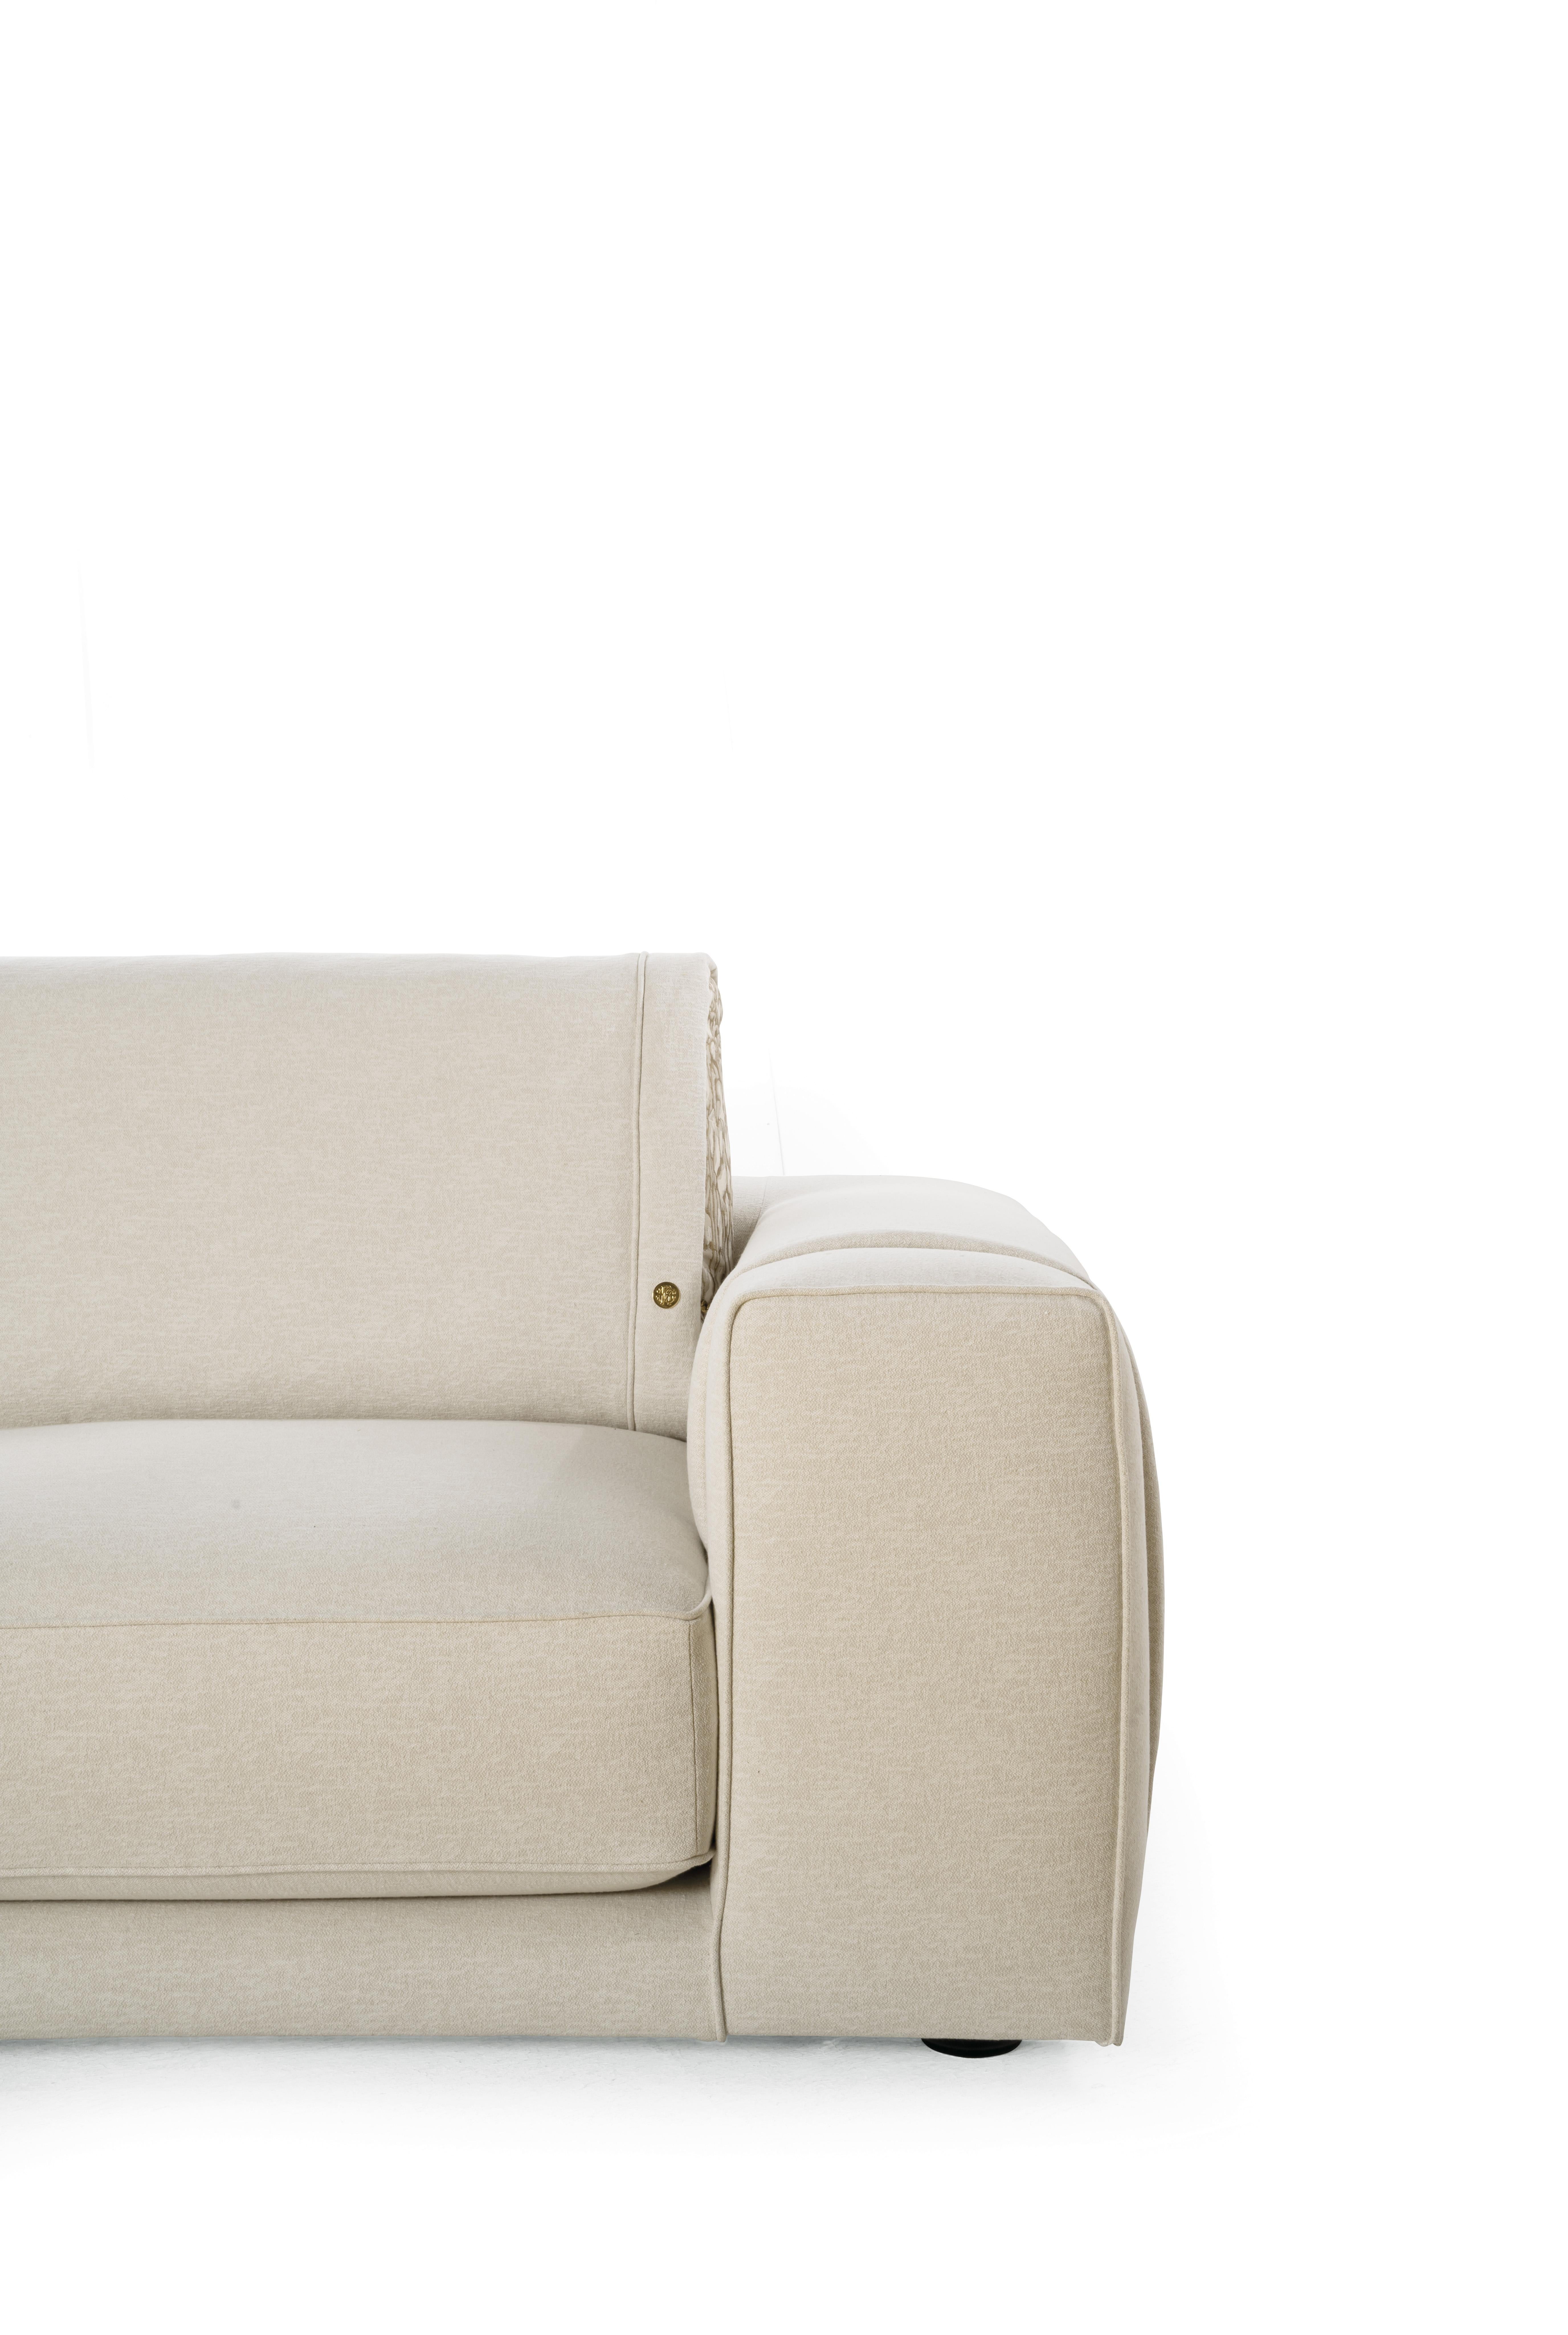 Italian 21st Century Smoking 2 Sofa in Fabric by Roberto Cavalli Home Interiors For Sale